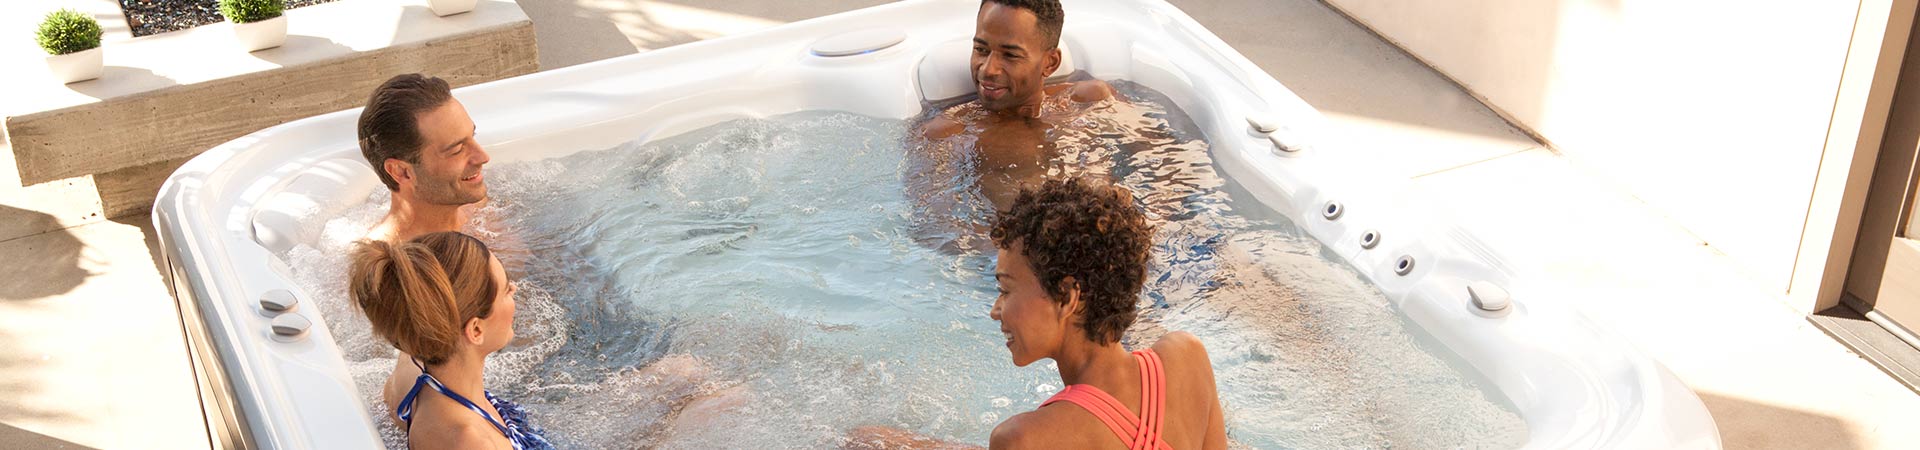 How A Daily Hot Tub Soak Can Help Improve Physical Wellnes